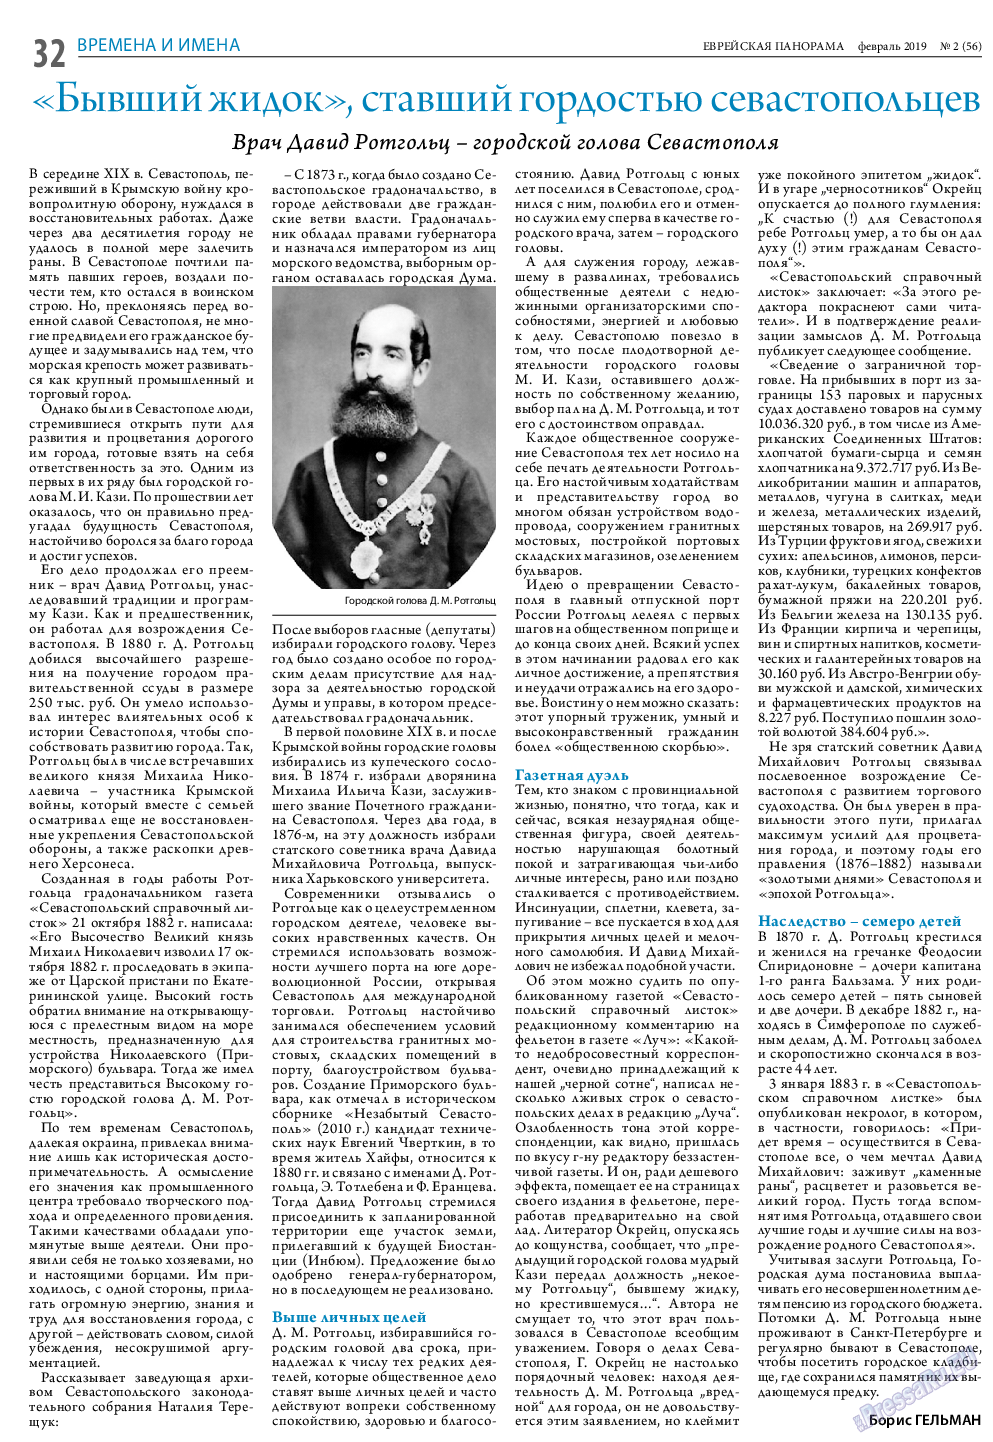 Еврейская панорама, газета. 2019 №2 стр.32